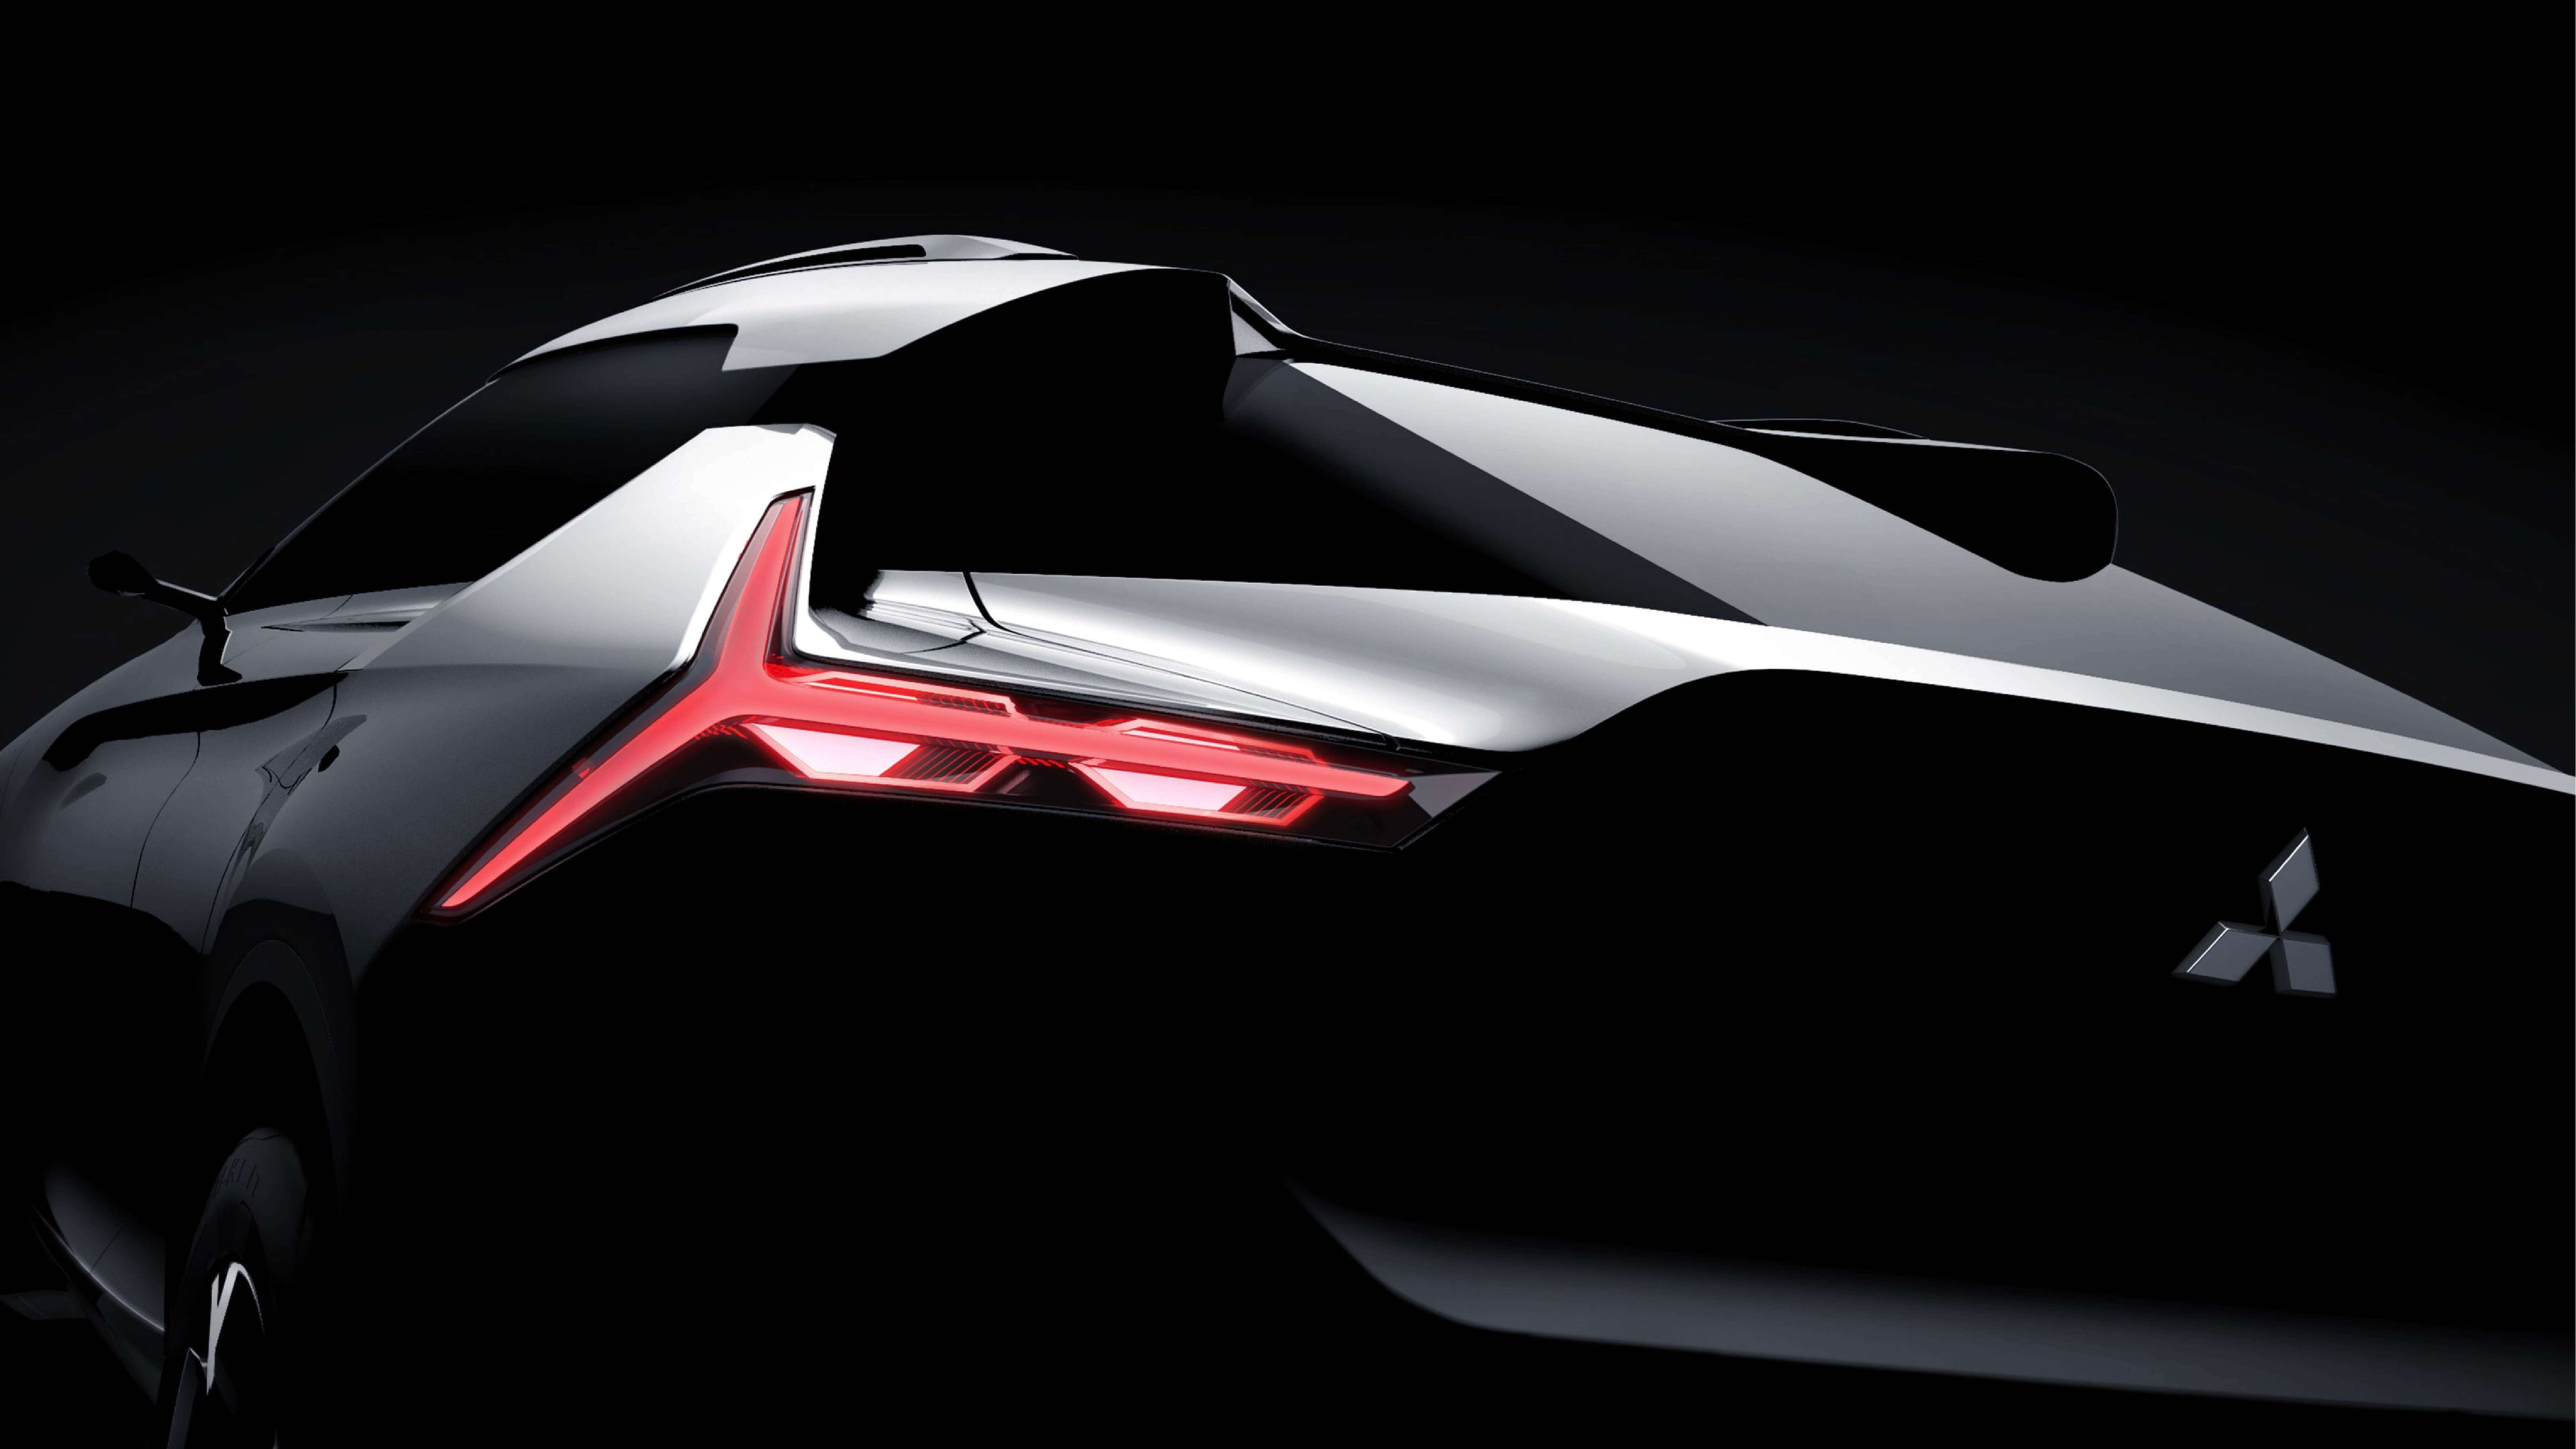 A global rebrand to take Mitsubishi Motors into the future